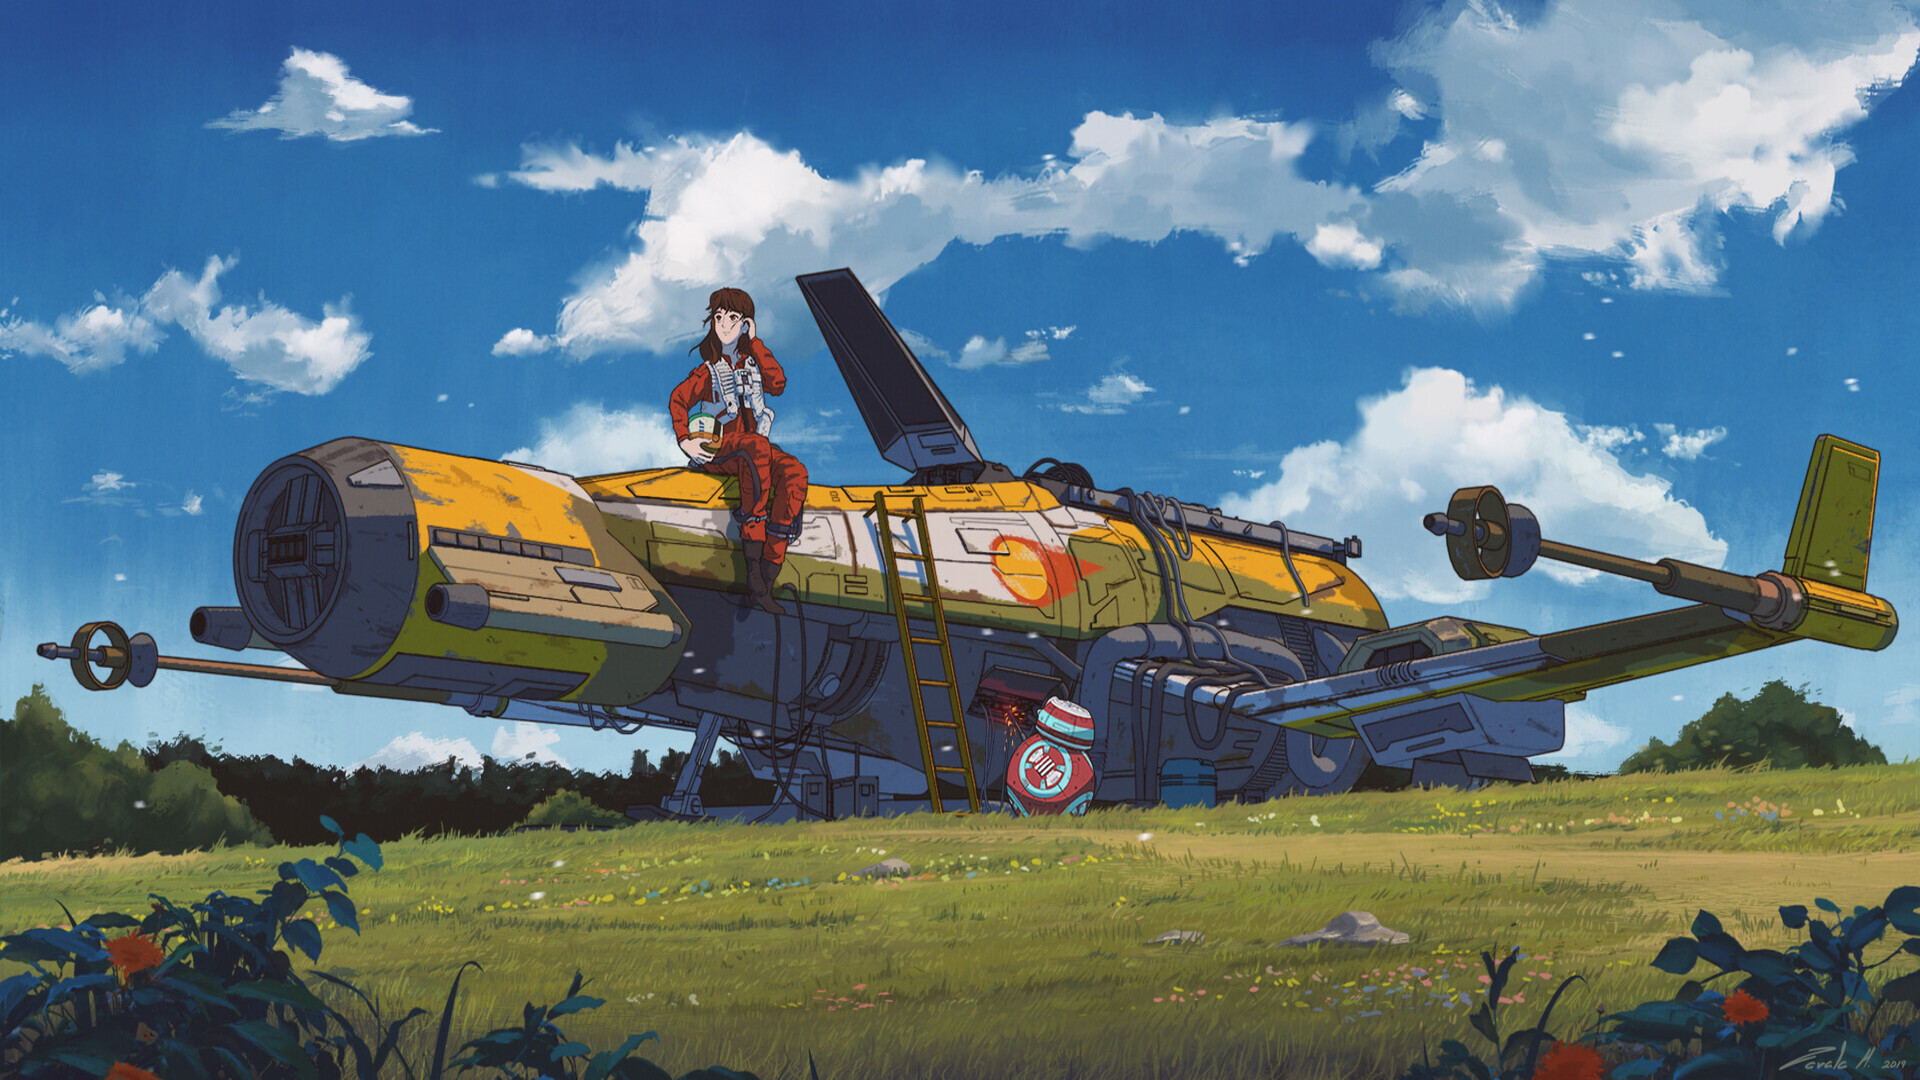 Studio Ghibli: The idea of Hayao Miyazaki, A Japanese animator, director, producer, screenwriter, author, and manga artist. 1920x1080 Full HD Wallpaper.